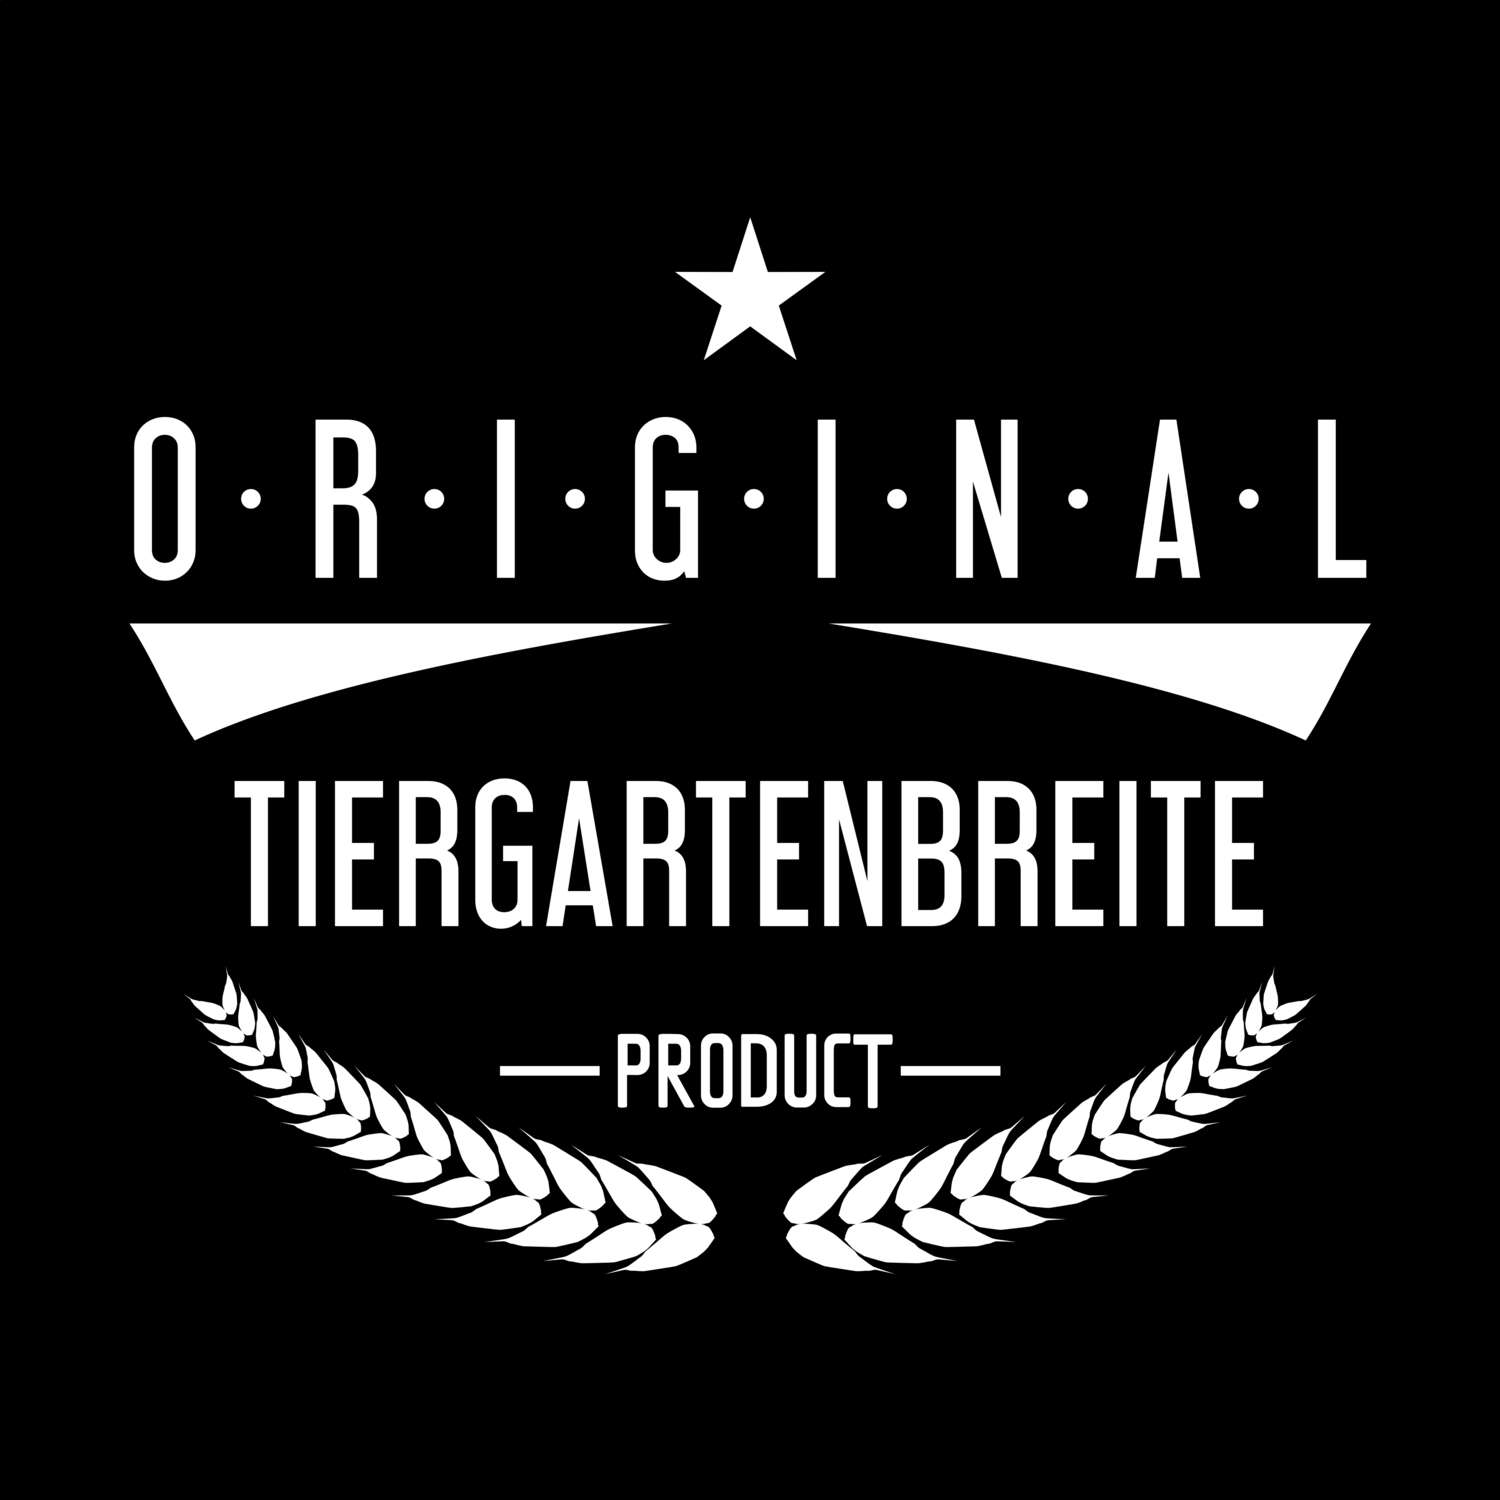 Tiergartenbreite T-Shirt »Original Product«